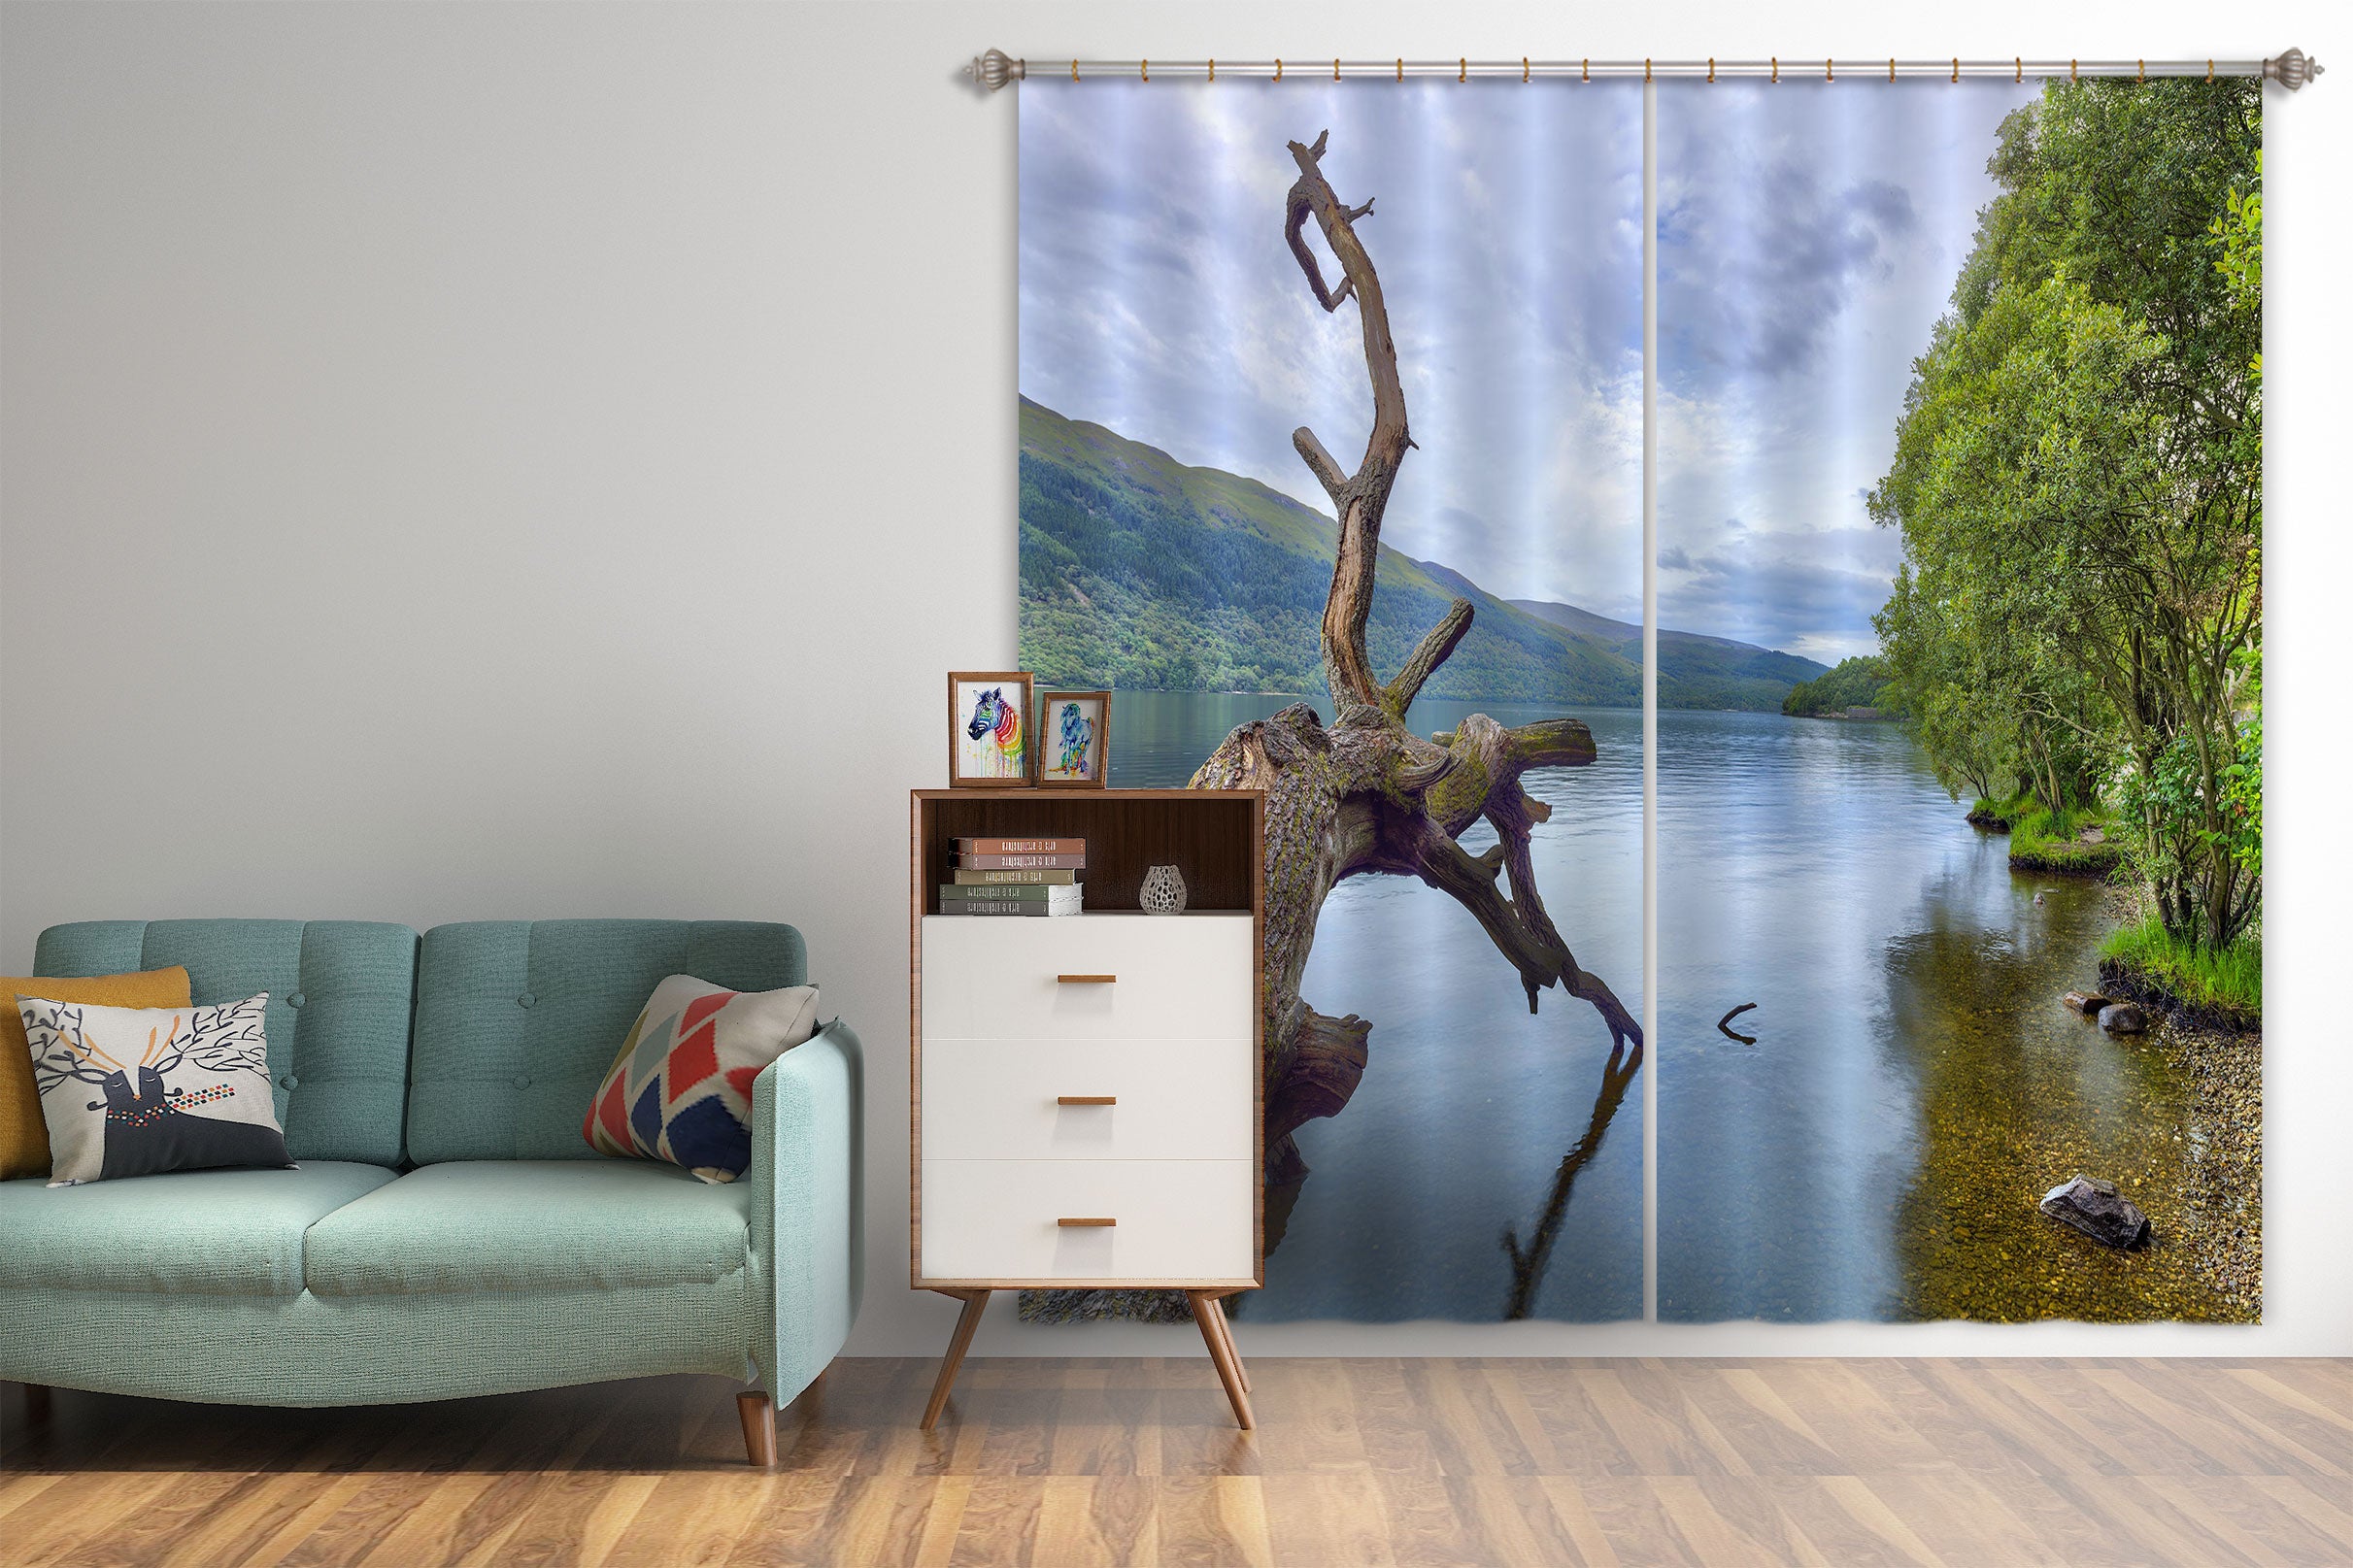 3D Scottish Loch 043 Assaf Frank Curtain Curtains Drapes